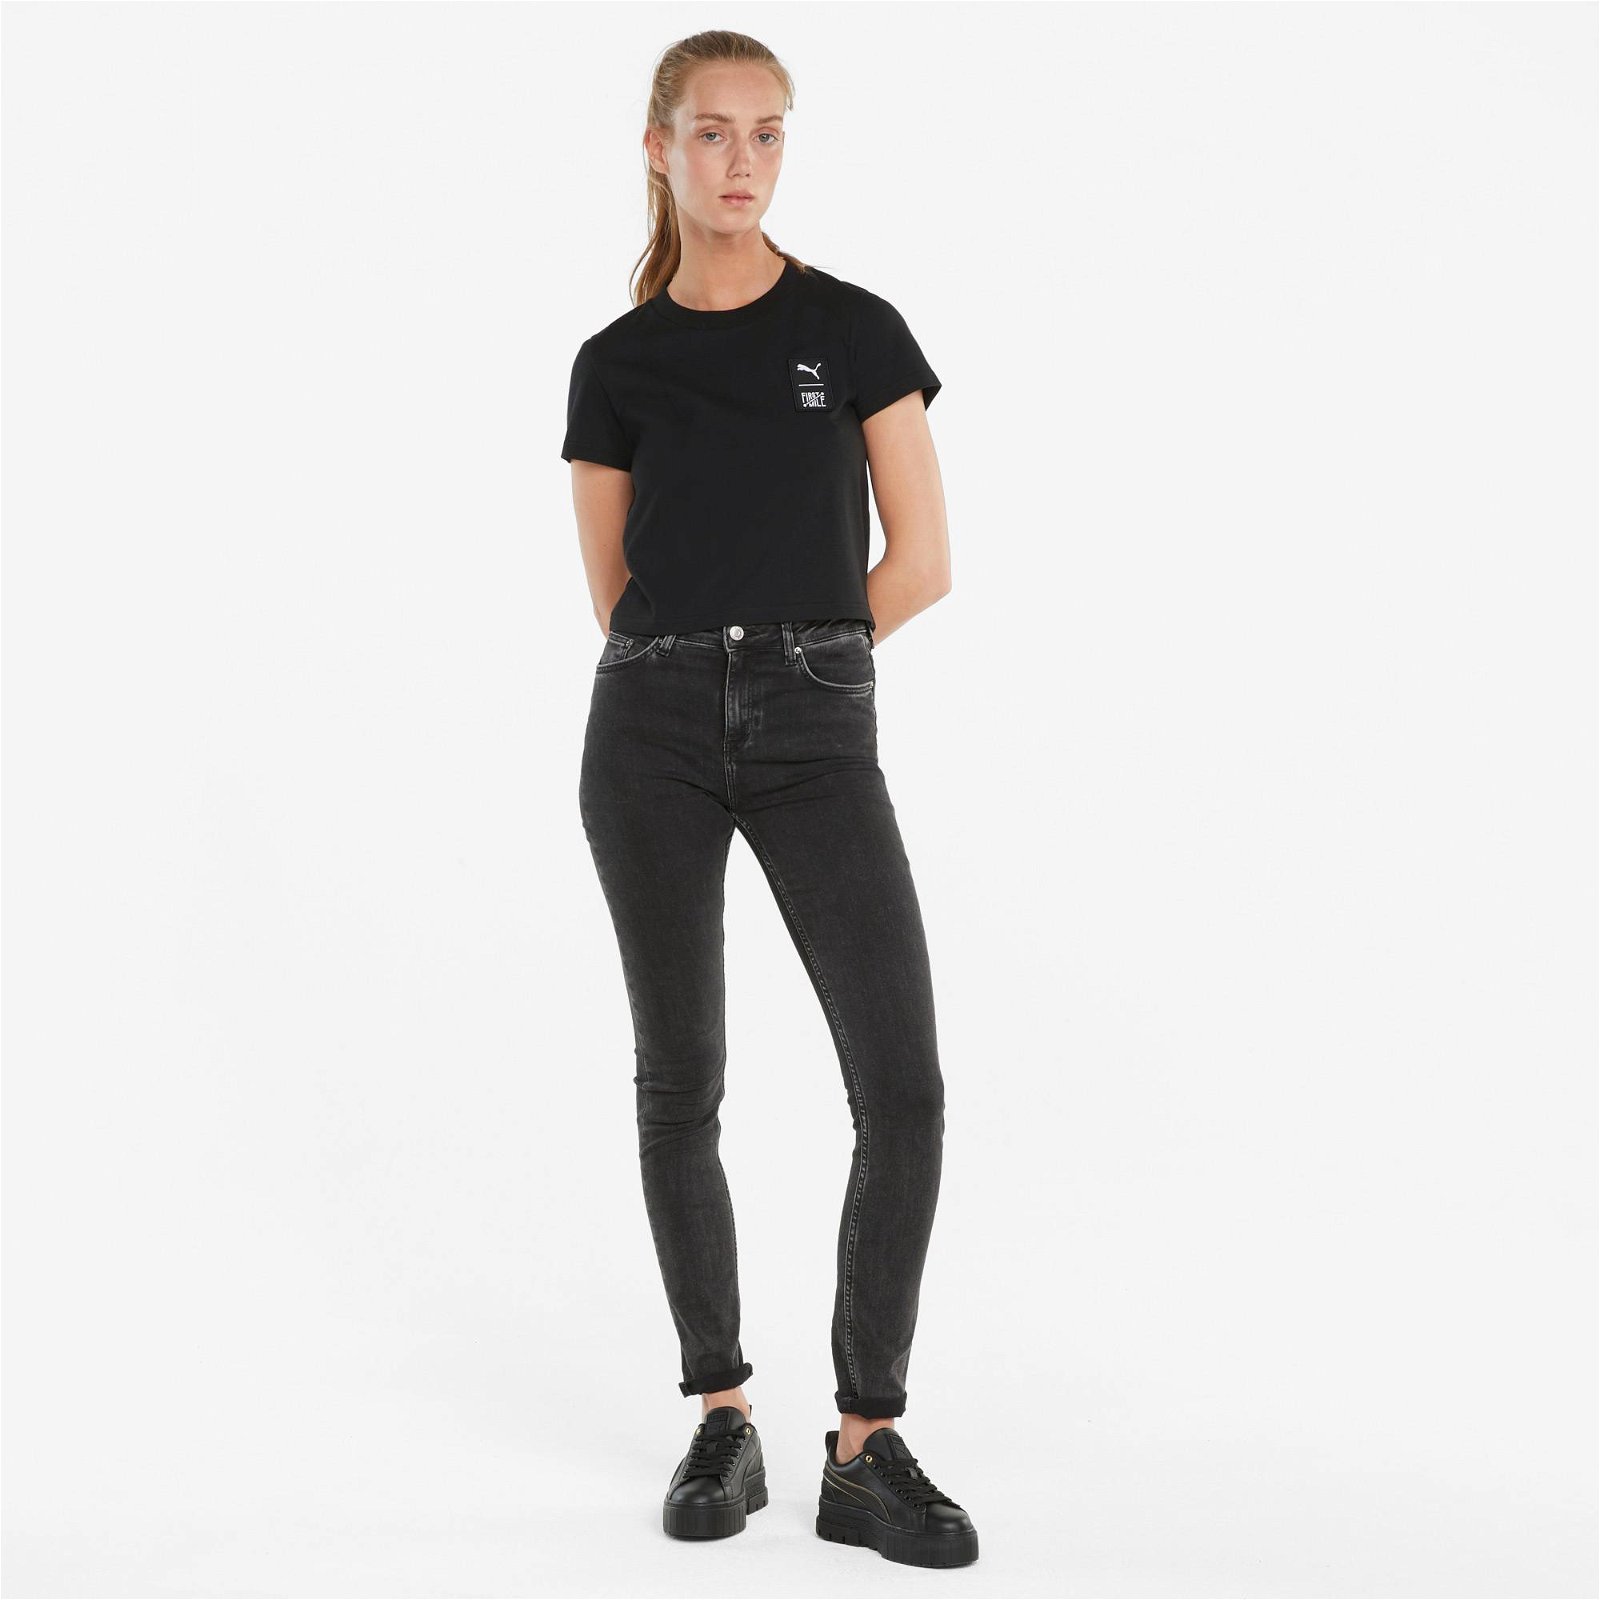 Puma First Mile Kadın Siyah T-Shirt